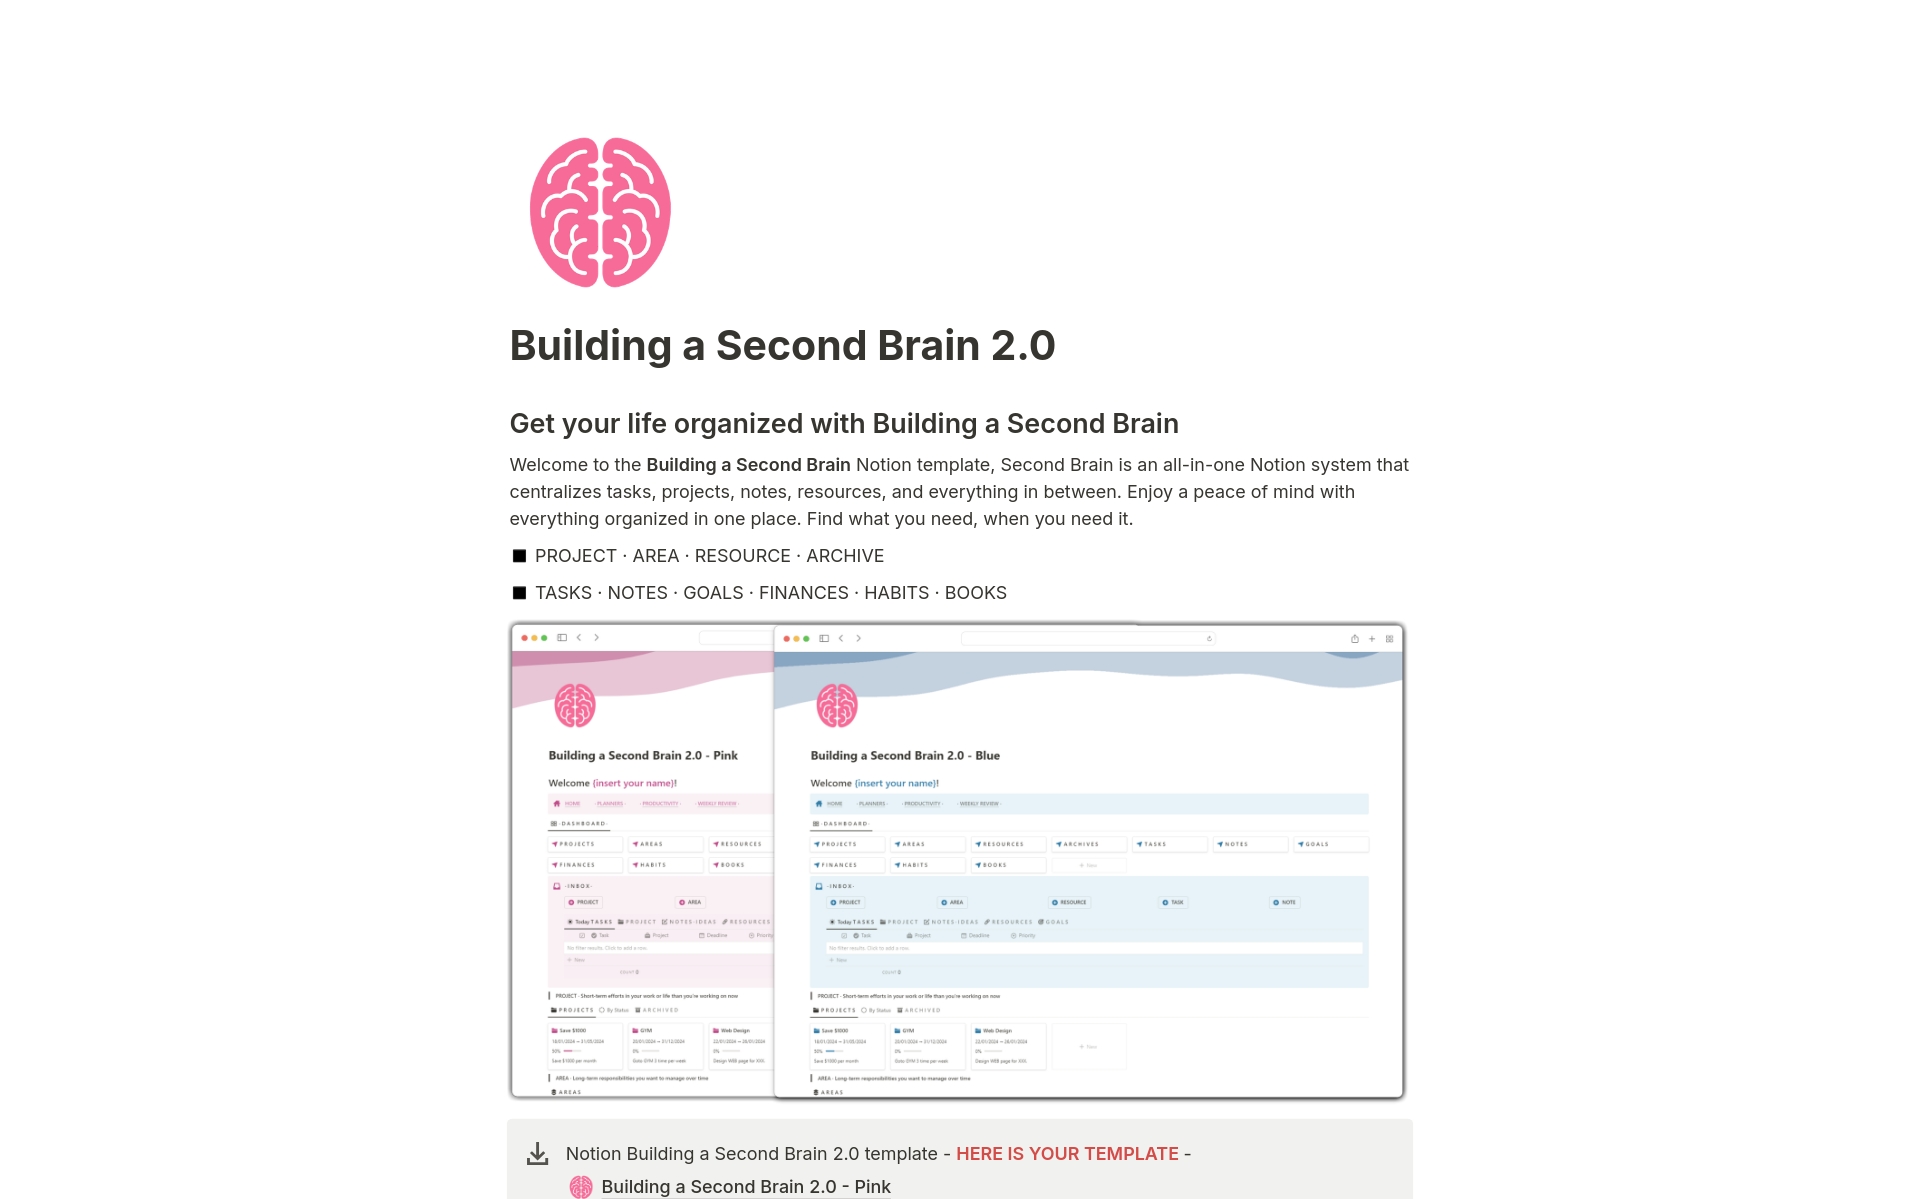 Mallin esikatselu nimelle Building a Second Brain 2.0